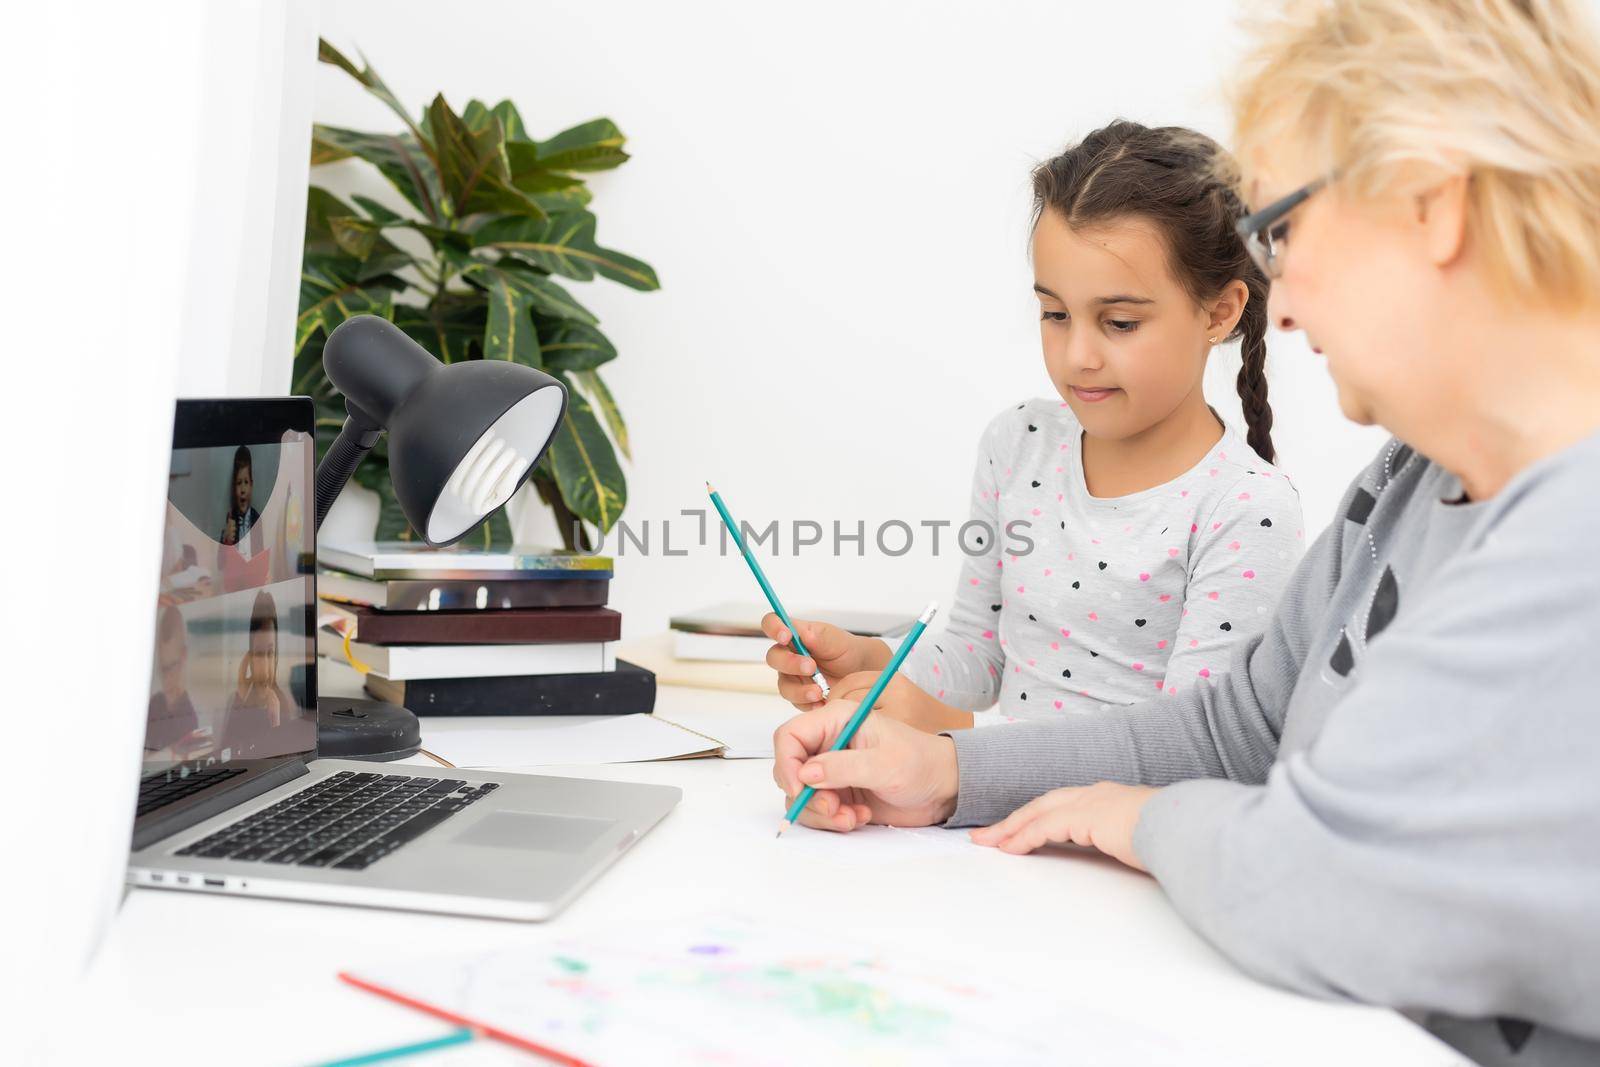 Helpful granny. Helpful loving granny assisting her cute granddaughter making homework by Andelov13